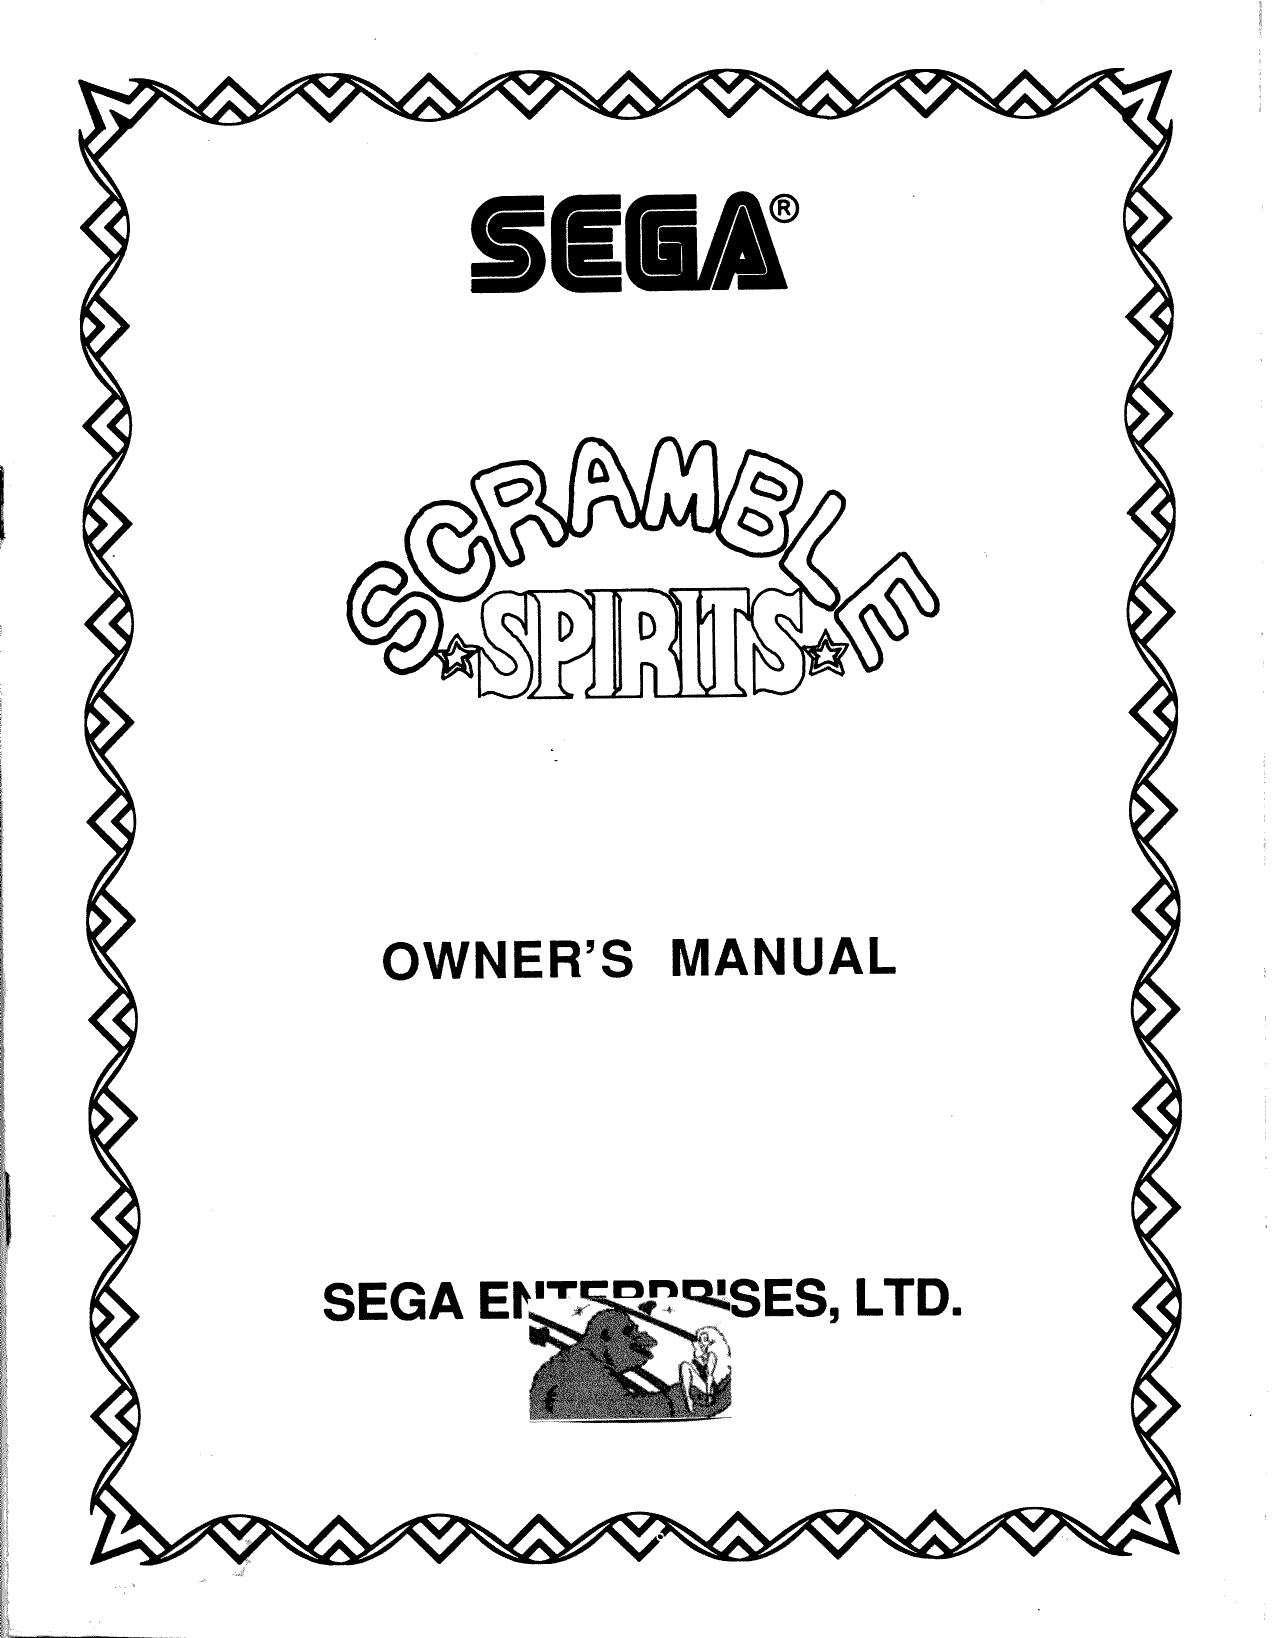 ScrambleSpirits Manual